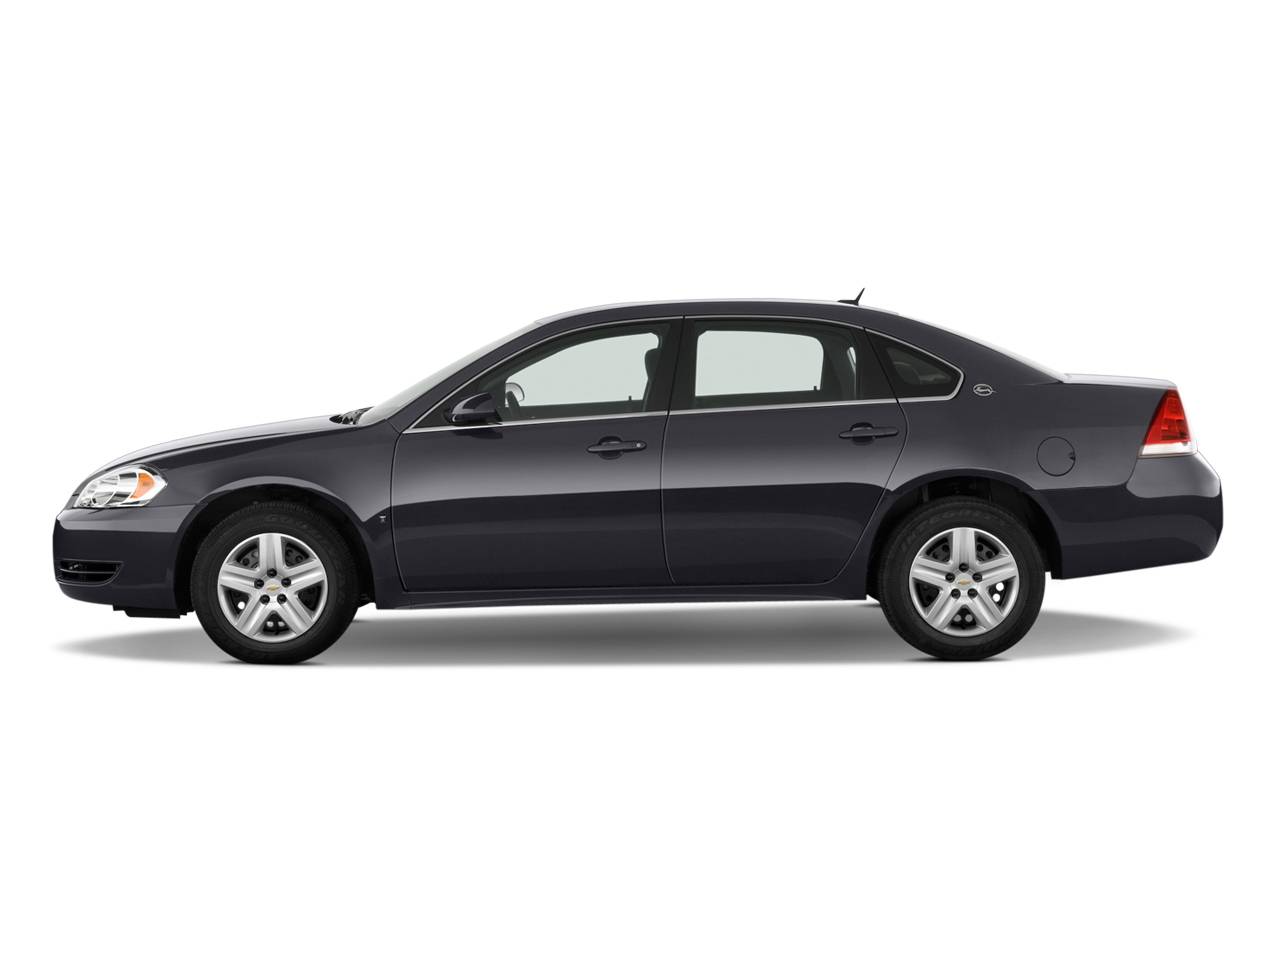 2011-chevrolet-impala-4-door-sedan-ls-retail-side-exterior-view_100323207_h.jpg